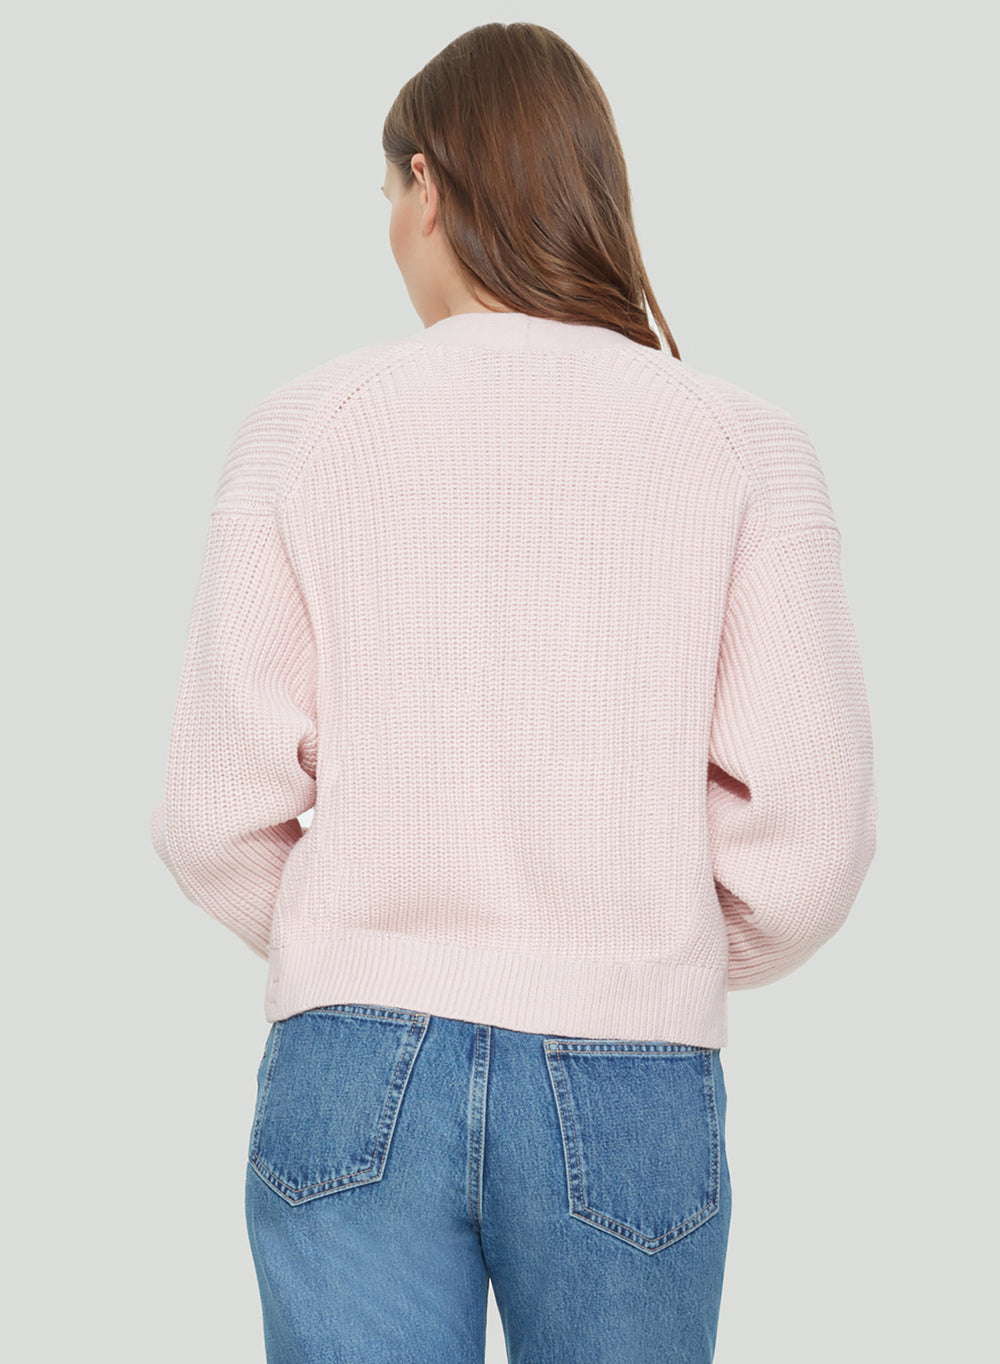 pink sweater cardigan-2127253D – LifeStylesWW